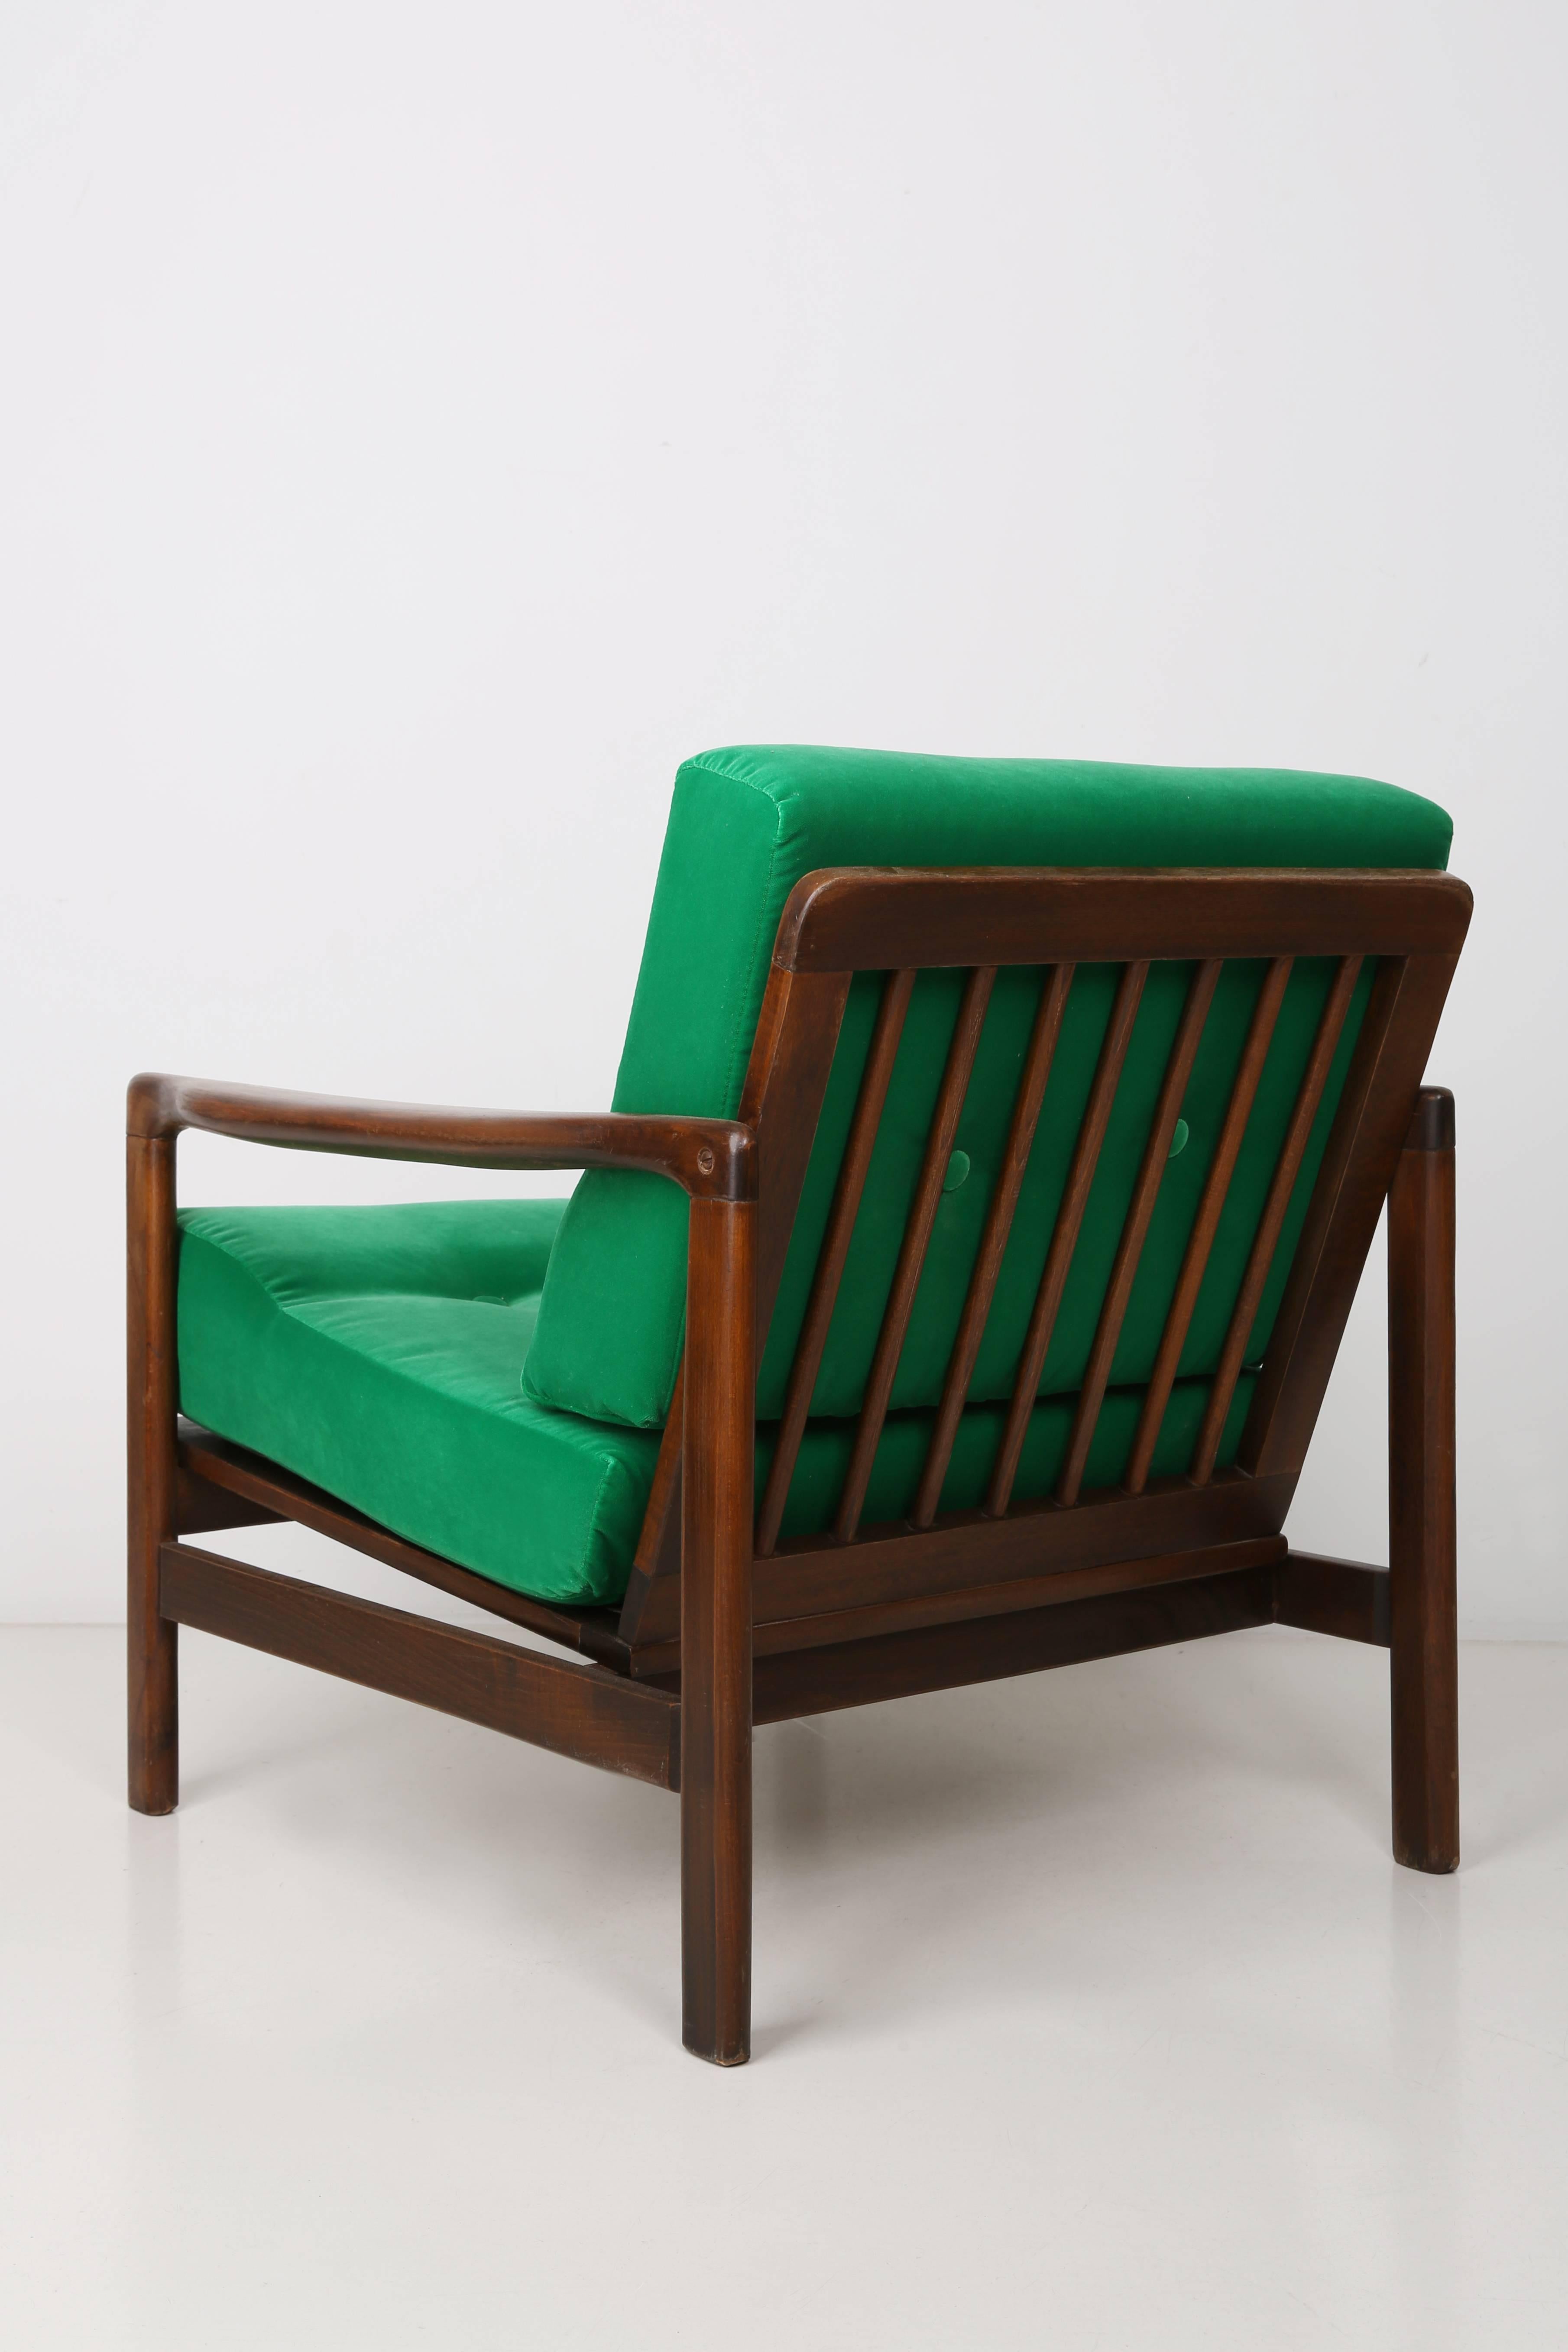 Polish Pair of Midcentury Green Grass Velvet Armchairs, Zenon Baczyk, 1960s For Sale